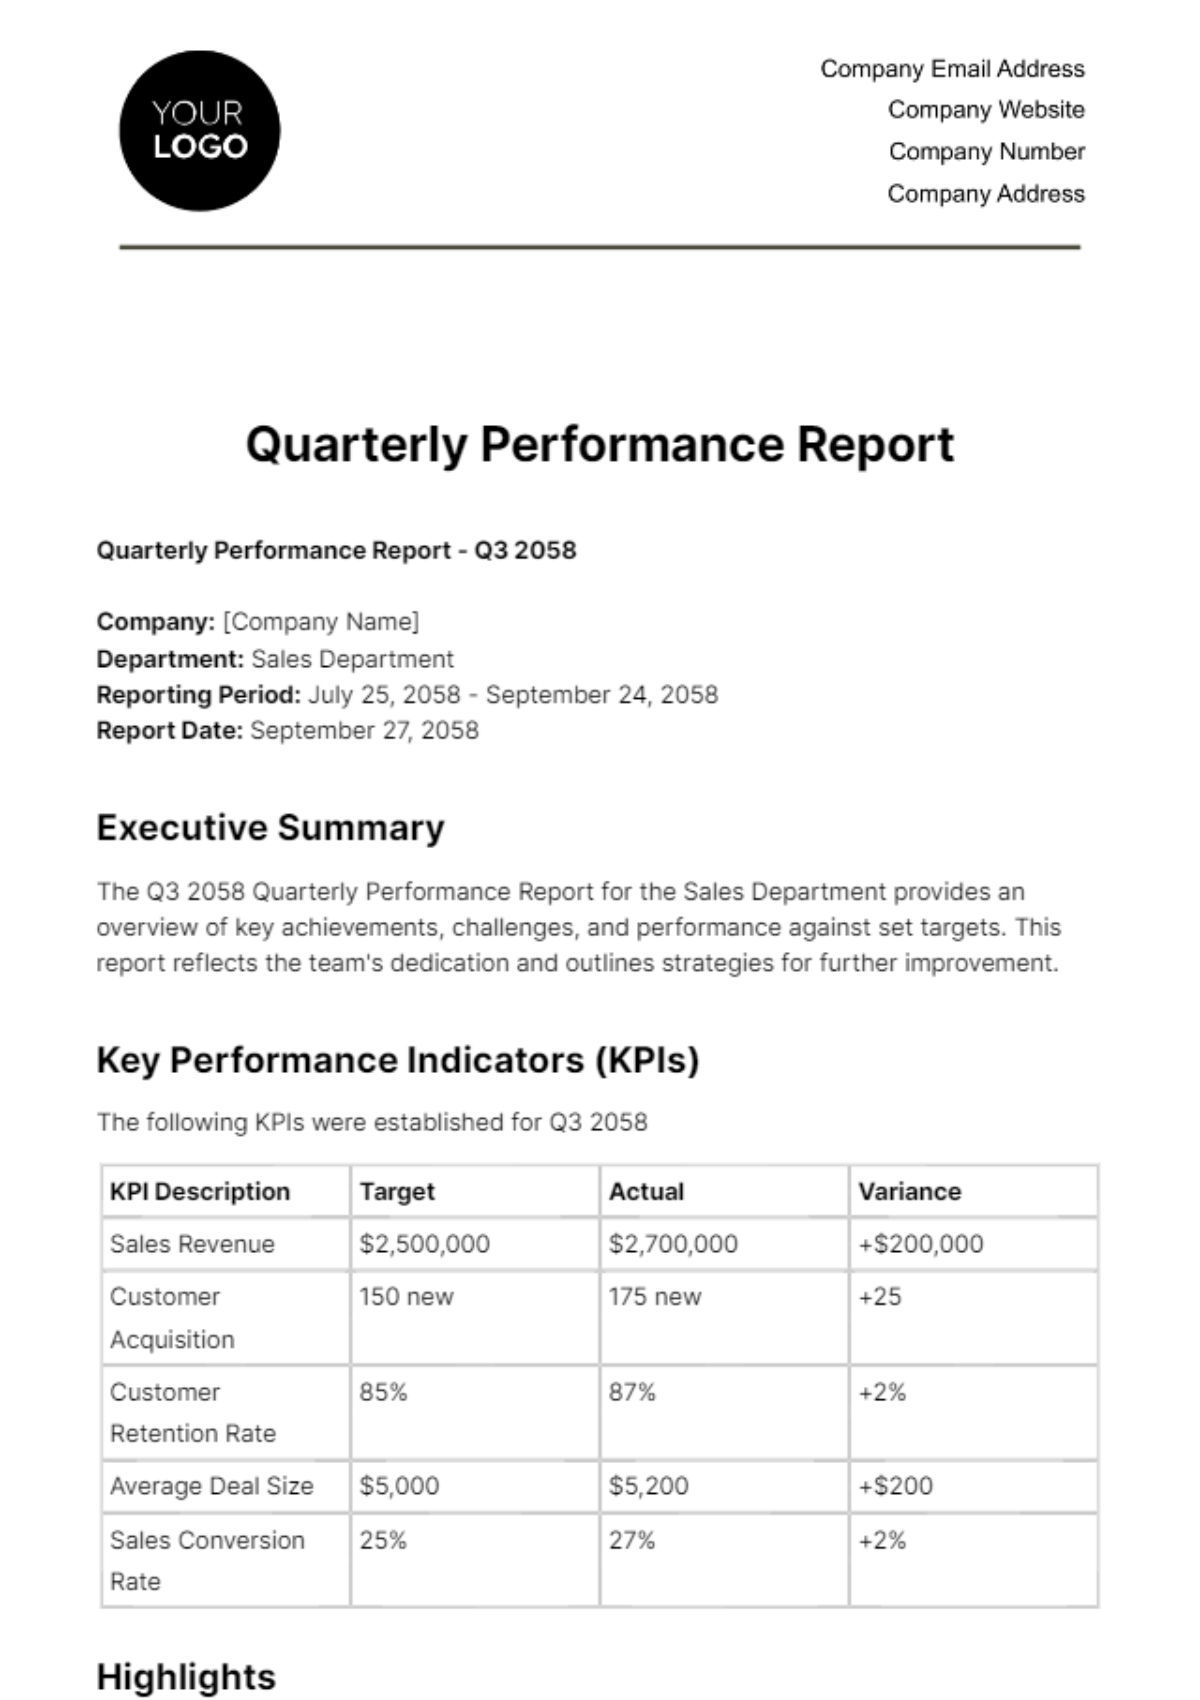 Quarterly Performance Report HR Template